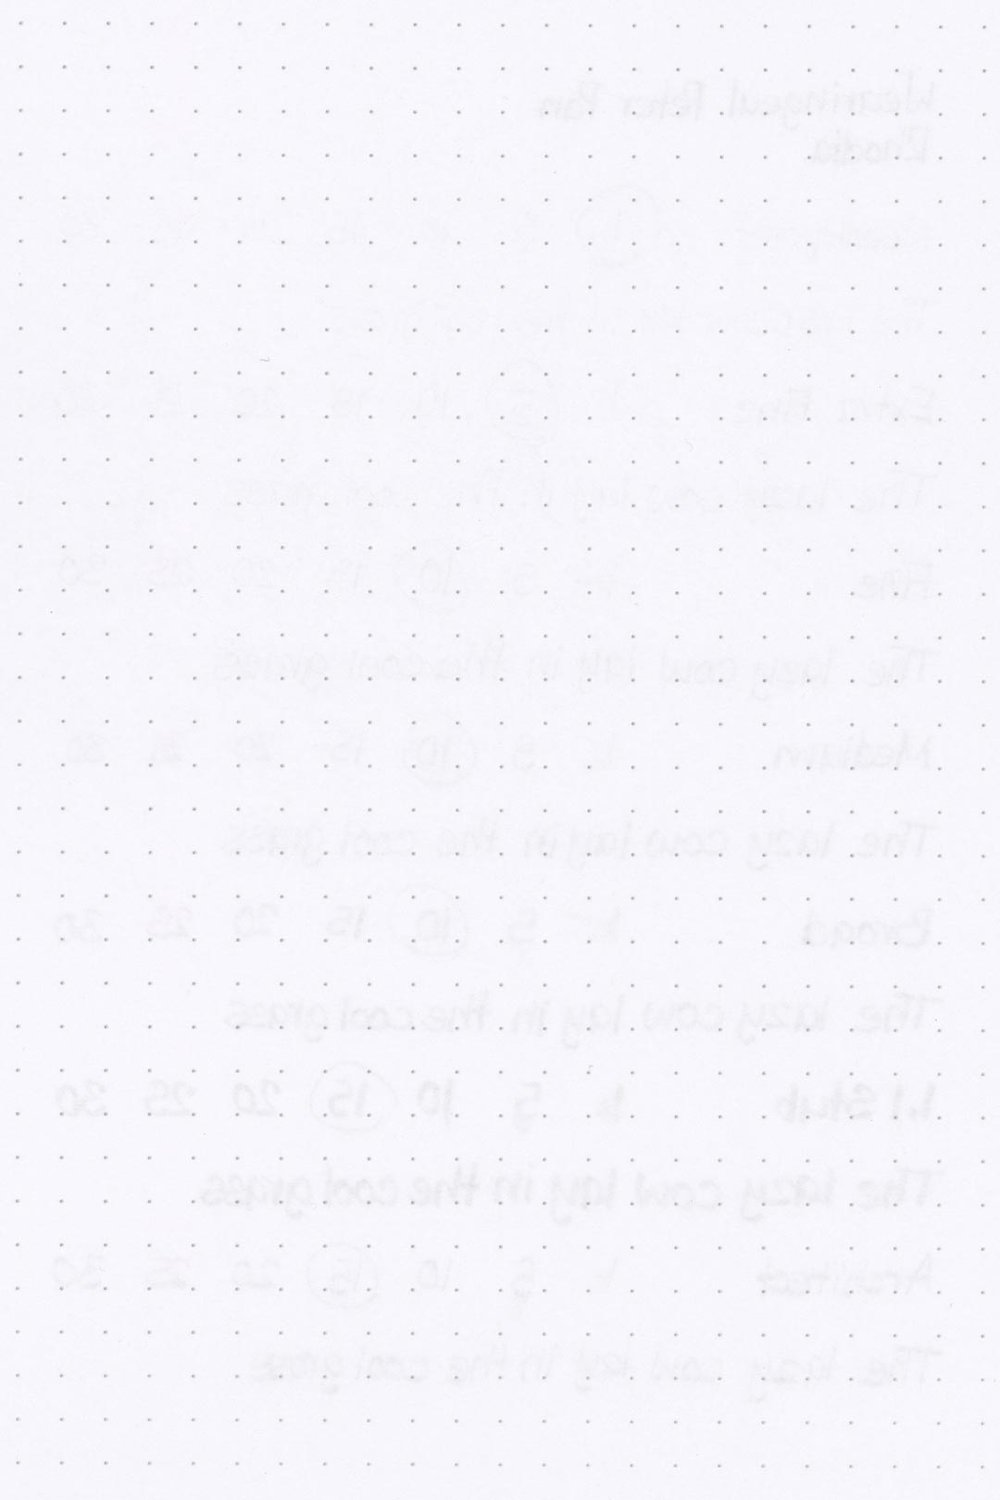 Wearingeul-Peter-Pan-Ink-Test-Rhodia-Rear.jpg